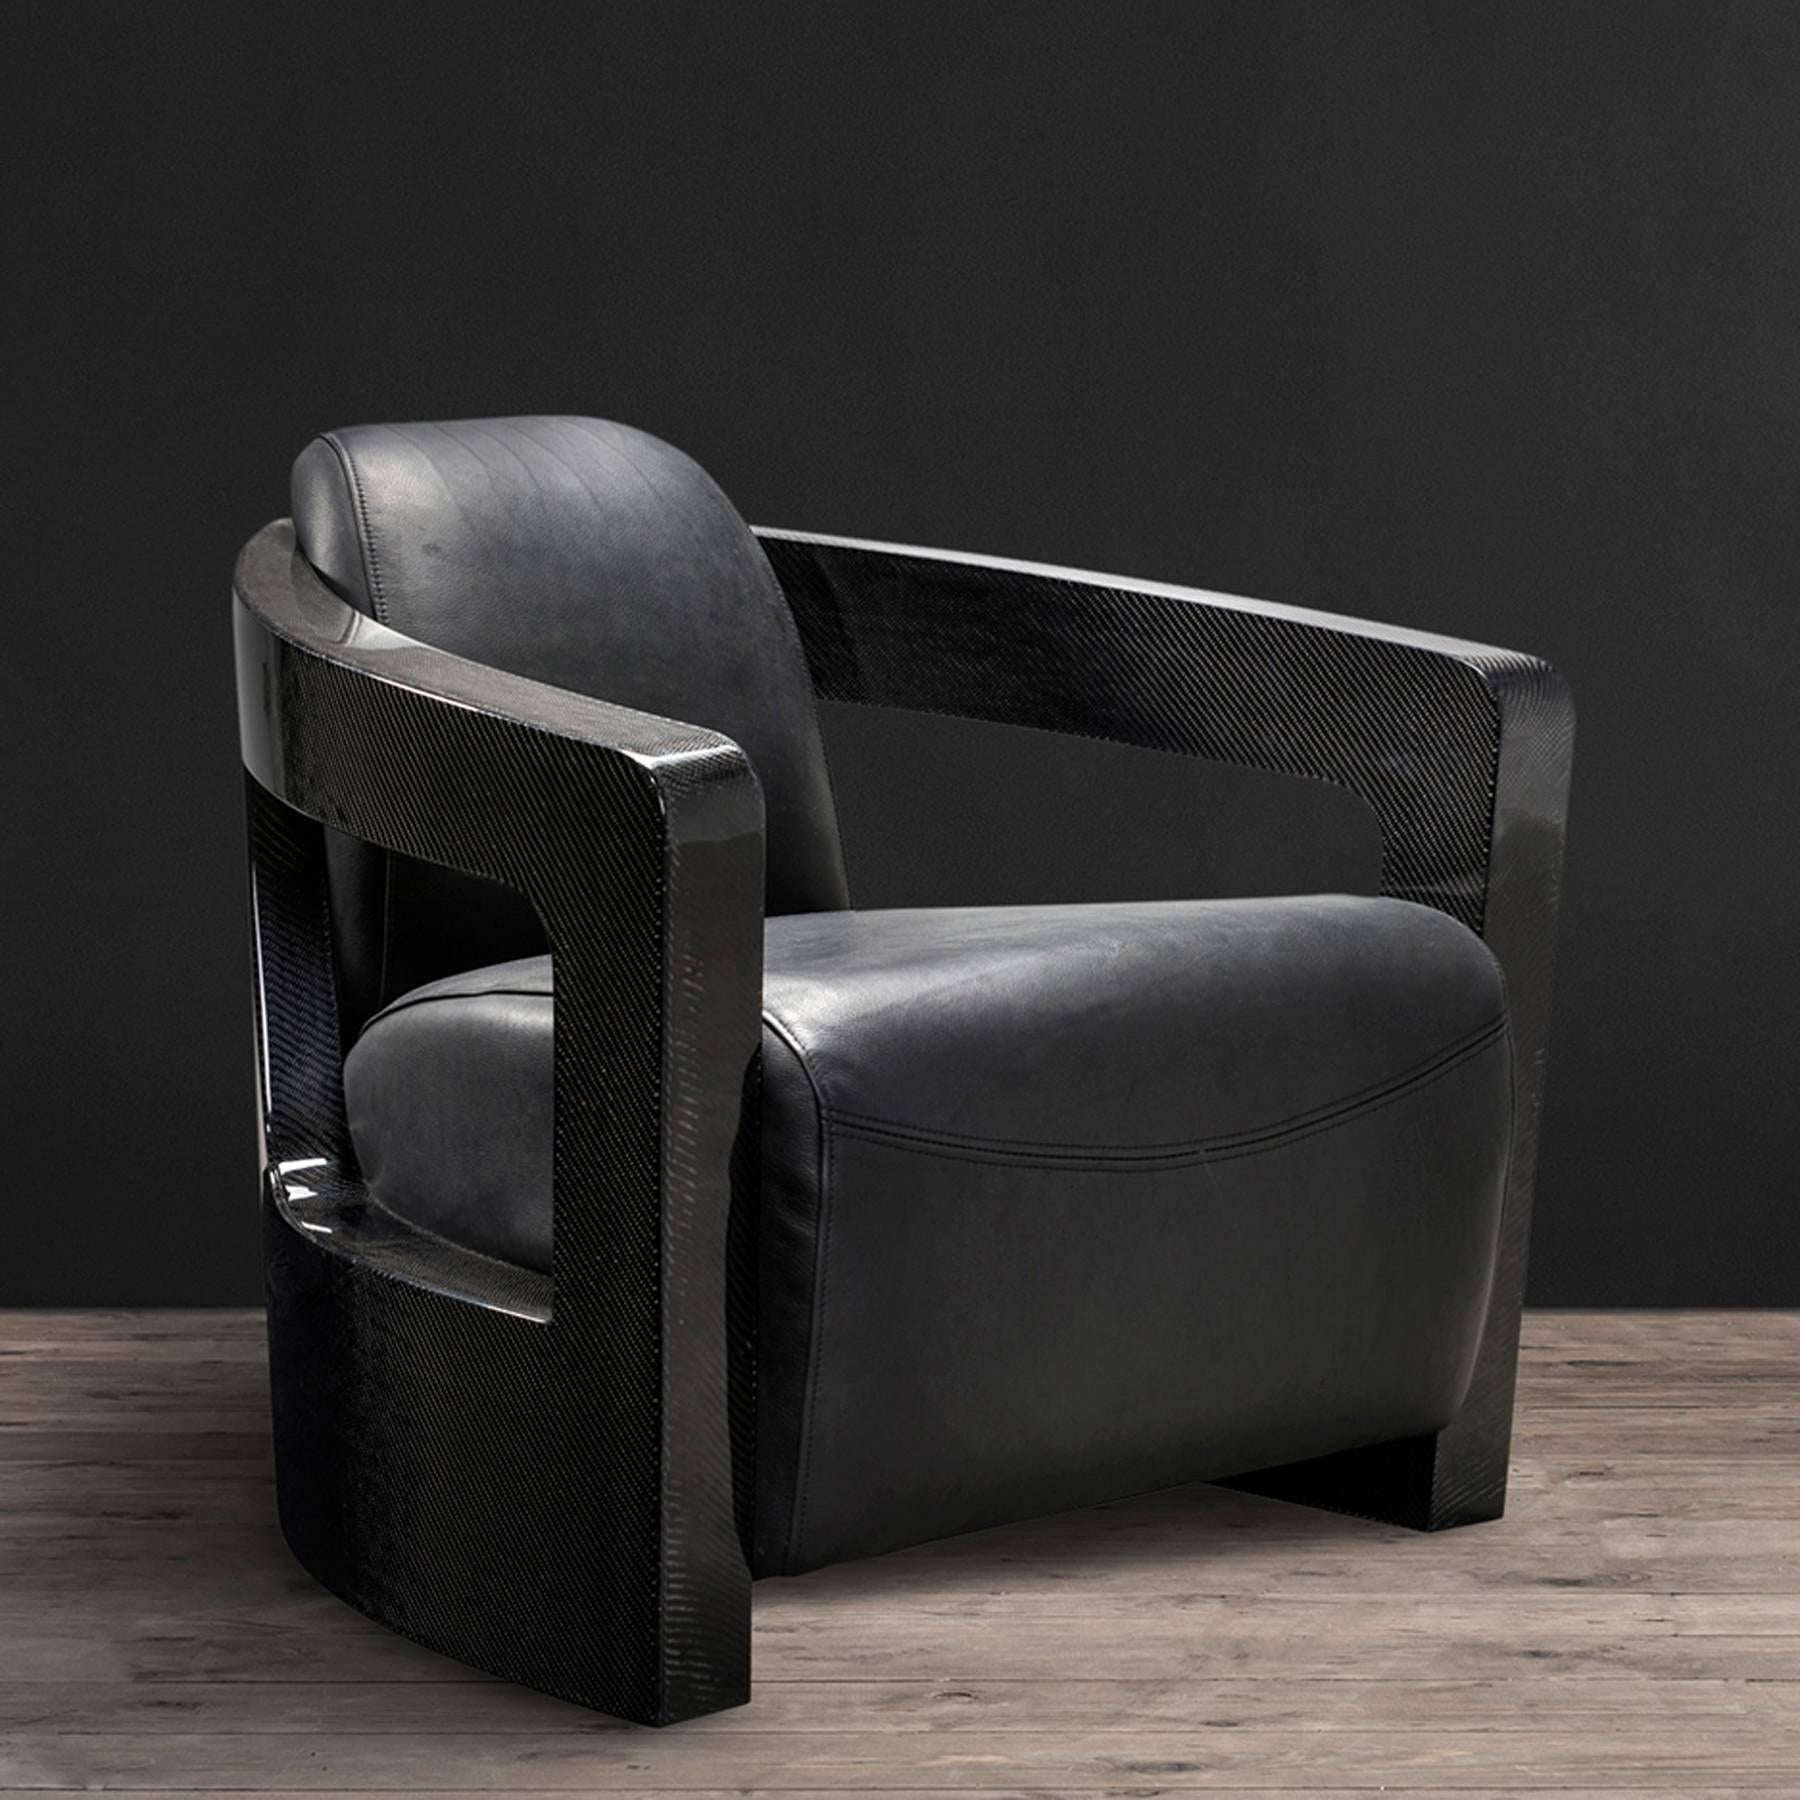 Armchair black carbon with black 
genuine leather, elegant rare piece.
